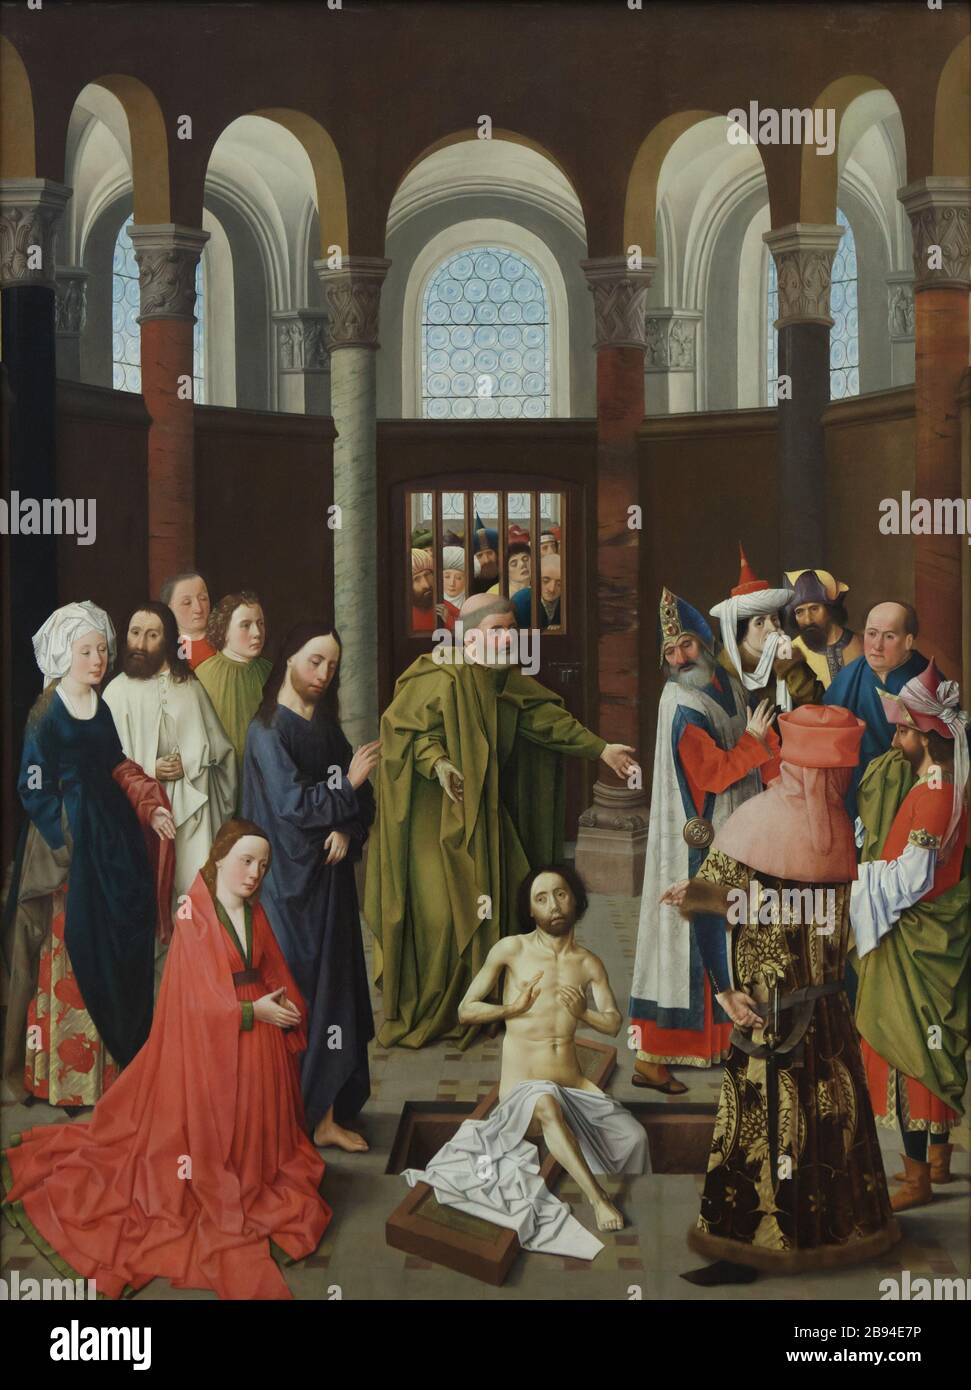 Painting 'Raising of Lazarus' by Early Netherlandish Renaissance painter Albert van Ouwater (1450-1460) on display in the Berliner Gemäldegalerie (Berlin Picture Gallery) in Berlin, Germany. Stock Photo